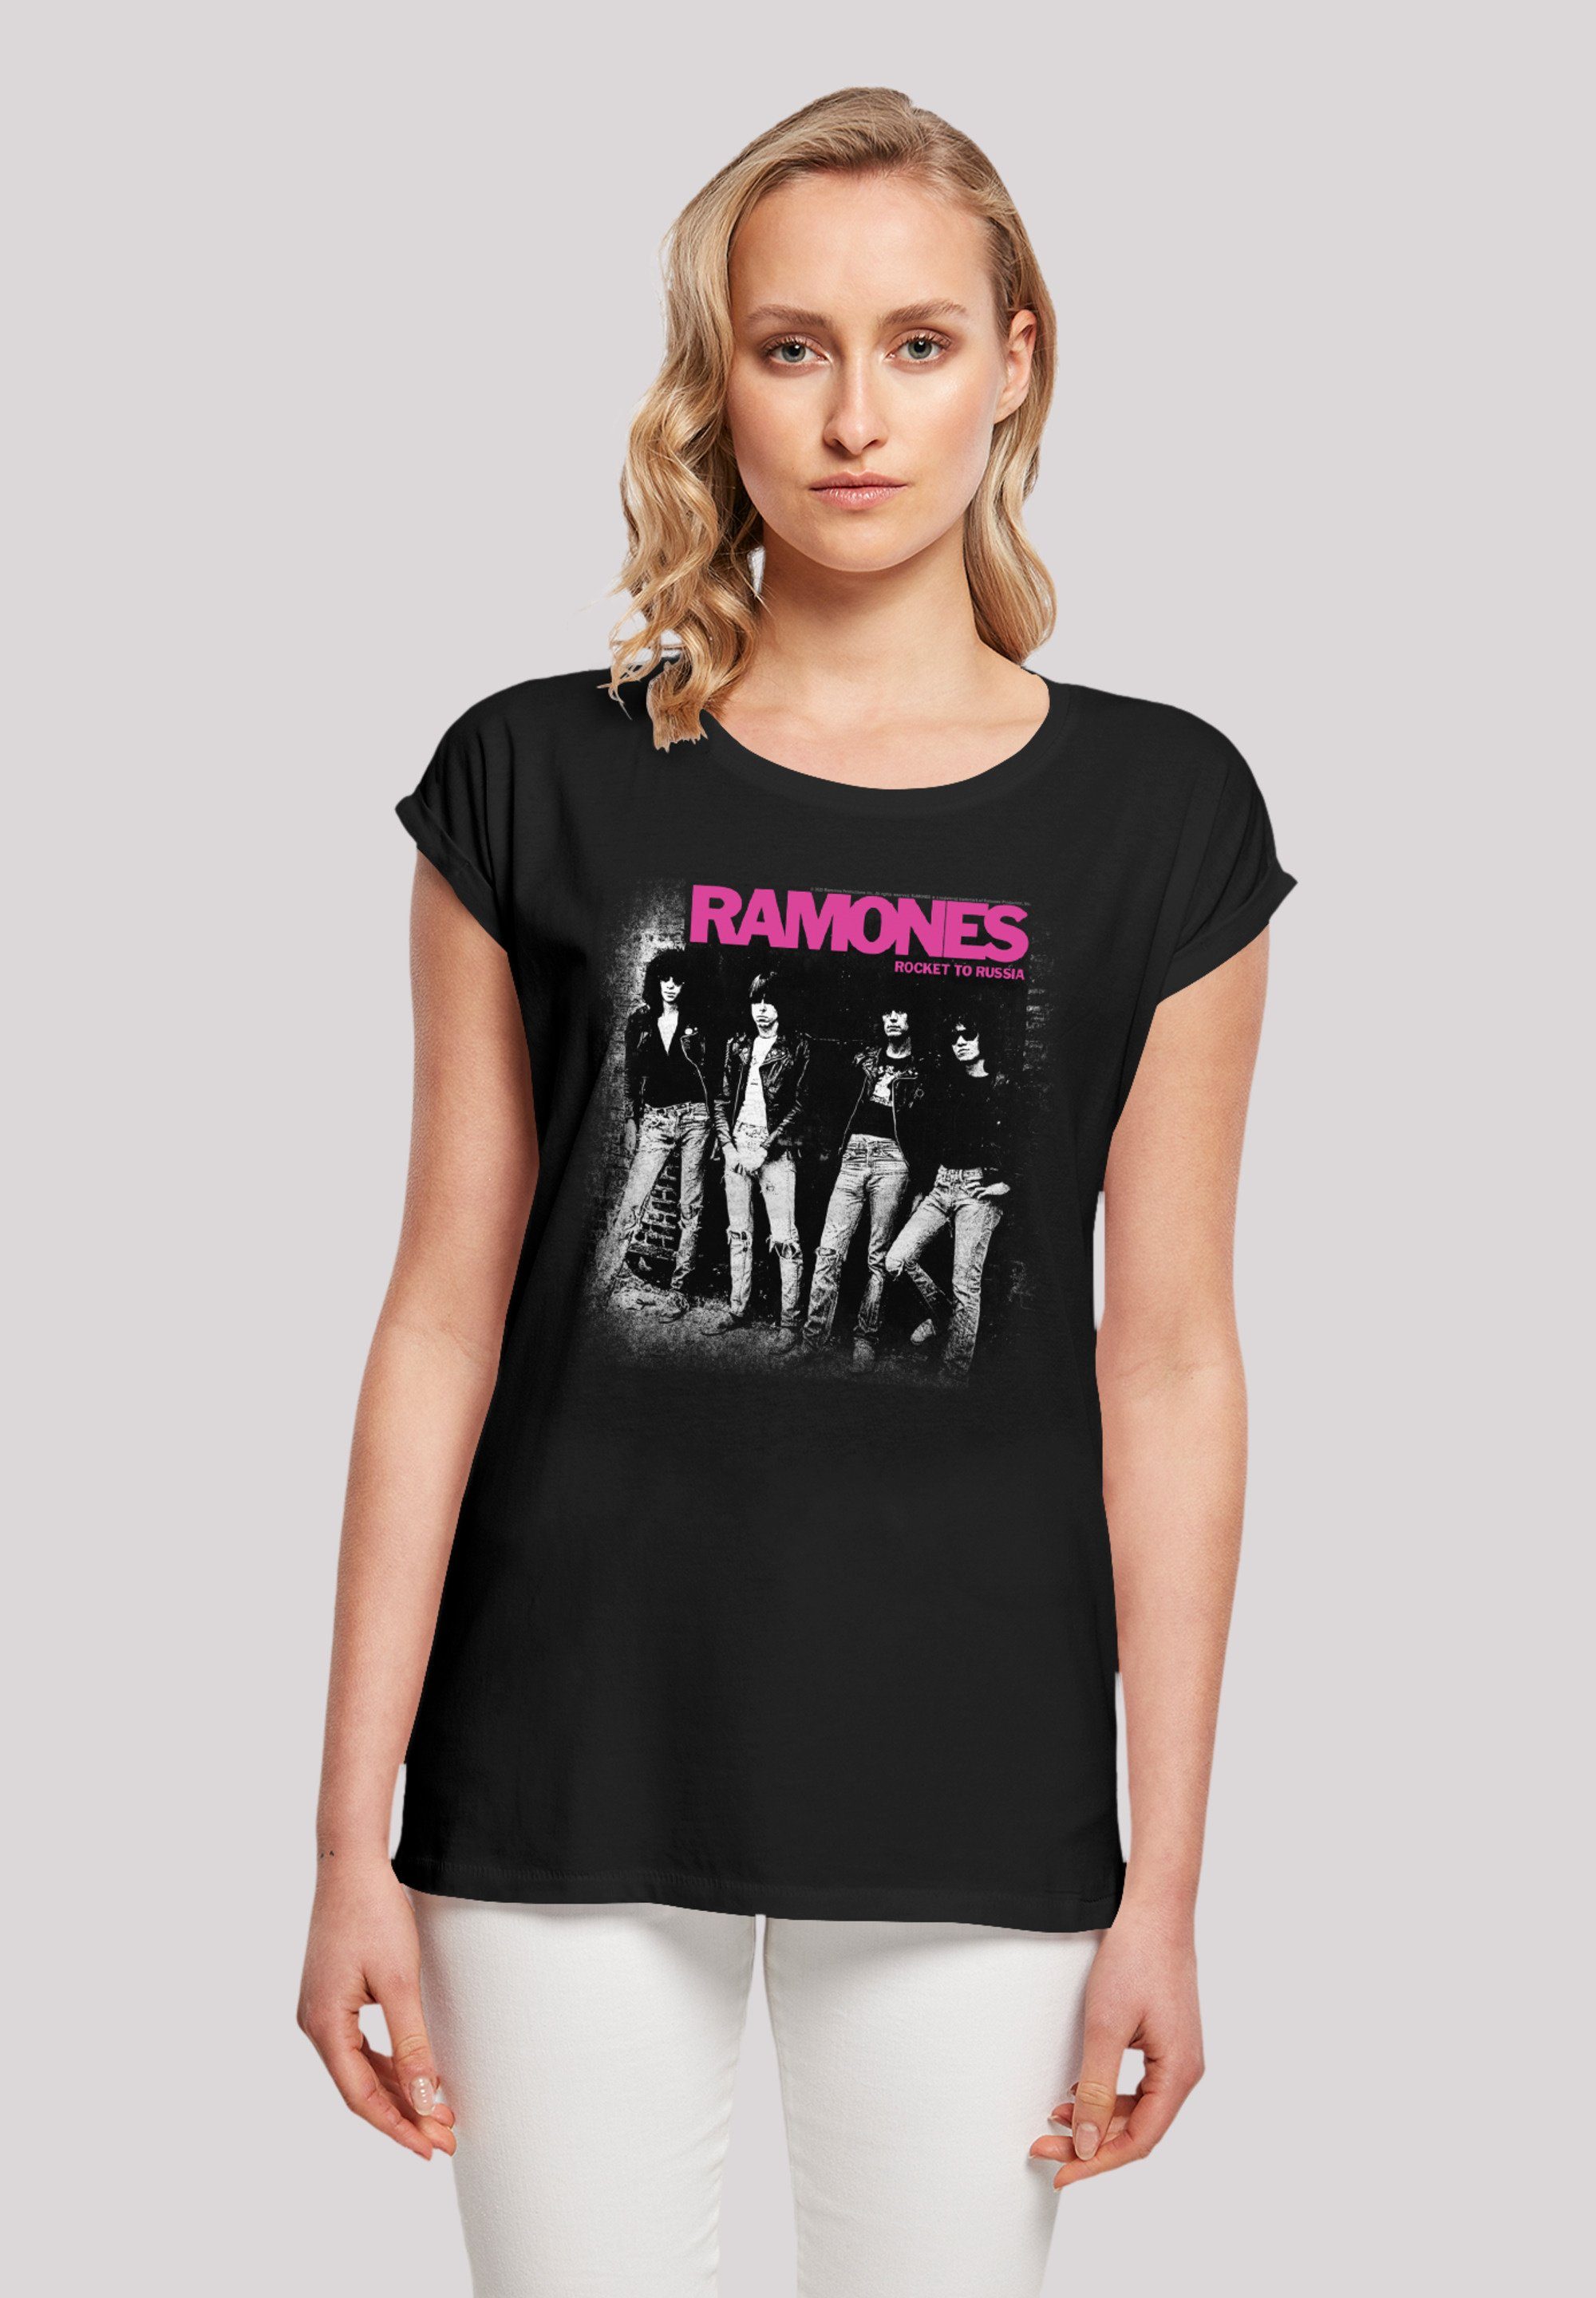 F4NT4STIC T-Shirt Ramones Rock Musik Band Rocket To Russia Faded Premium Qualität, Band, Rock-Musik